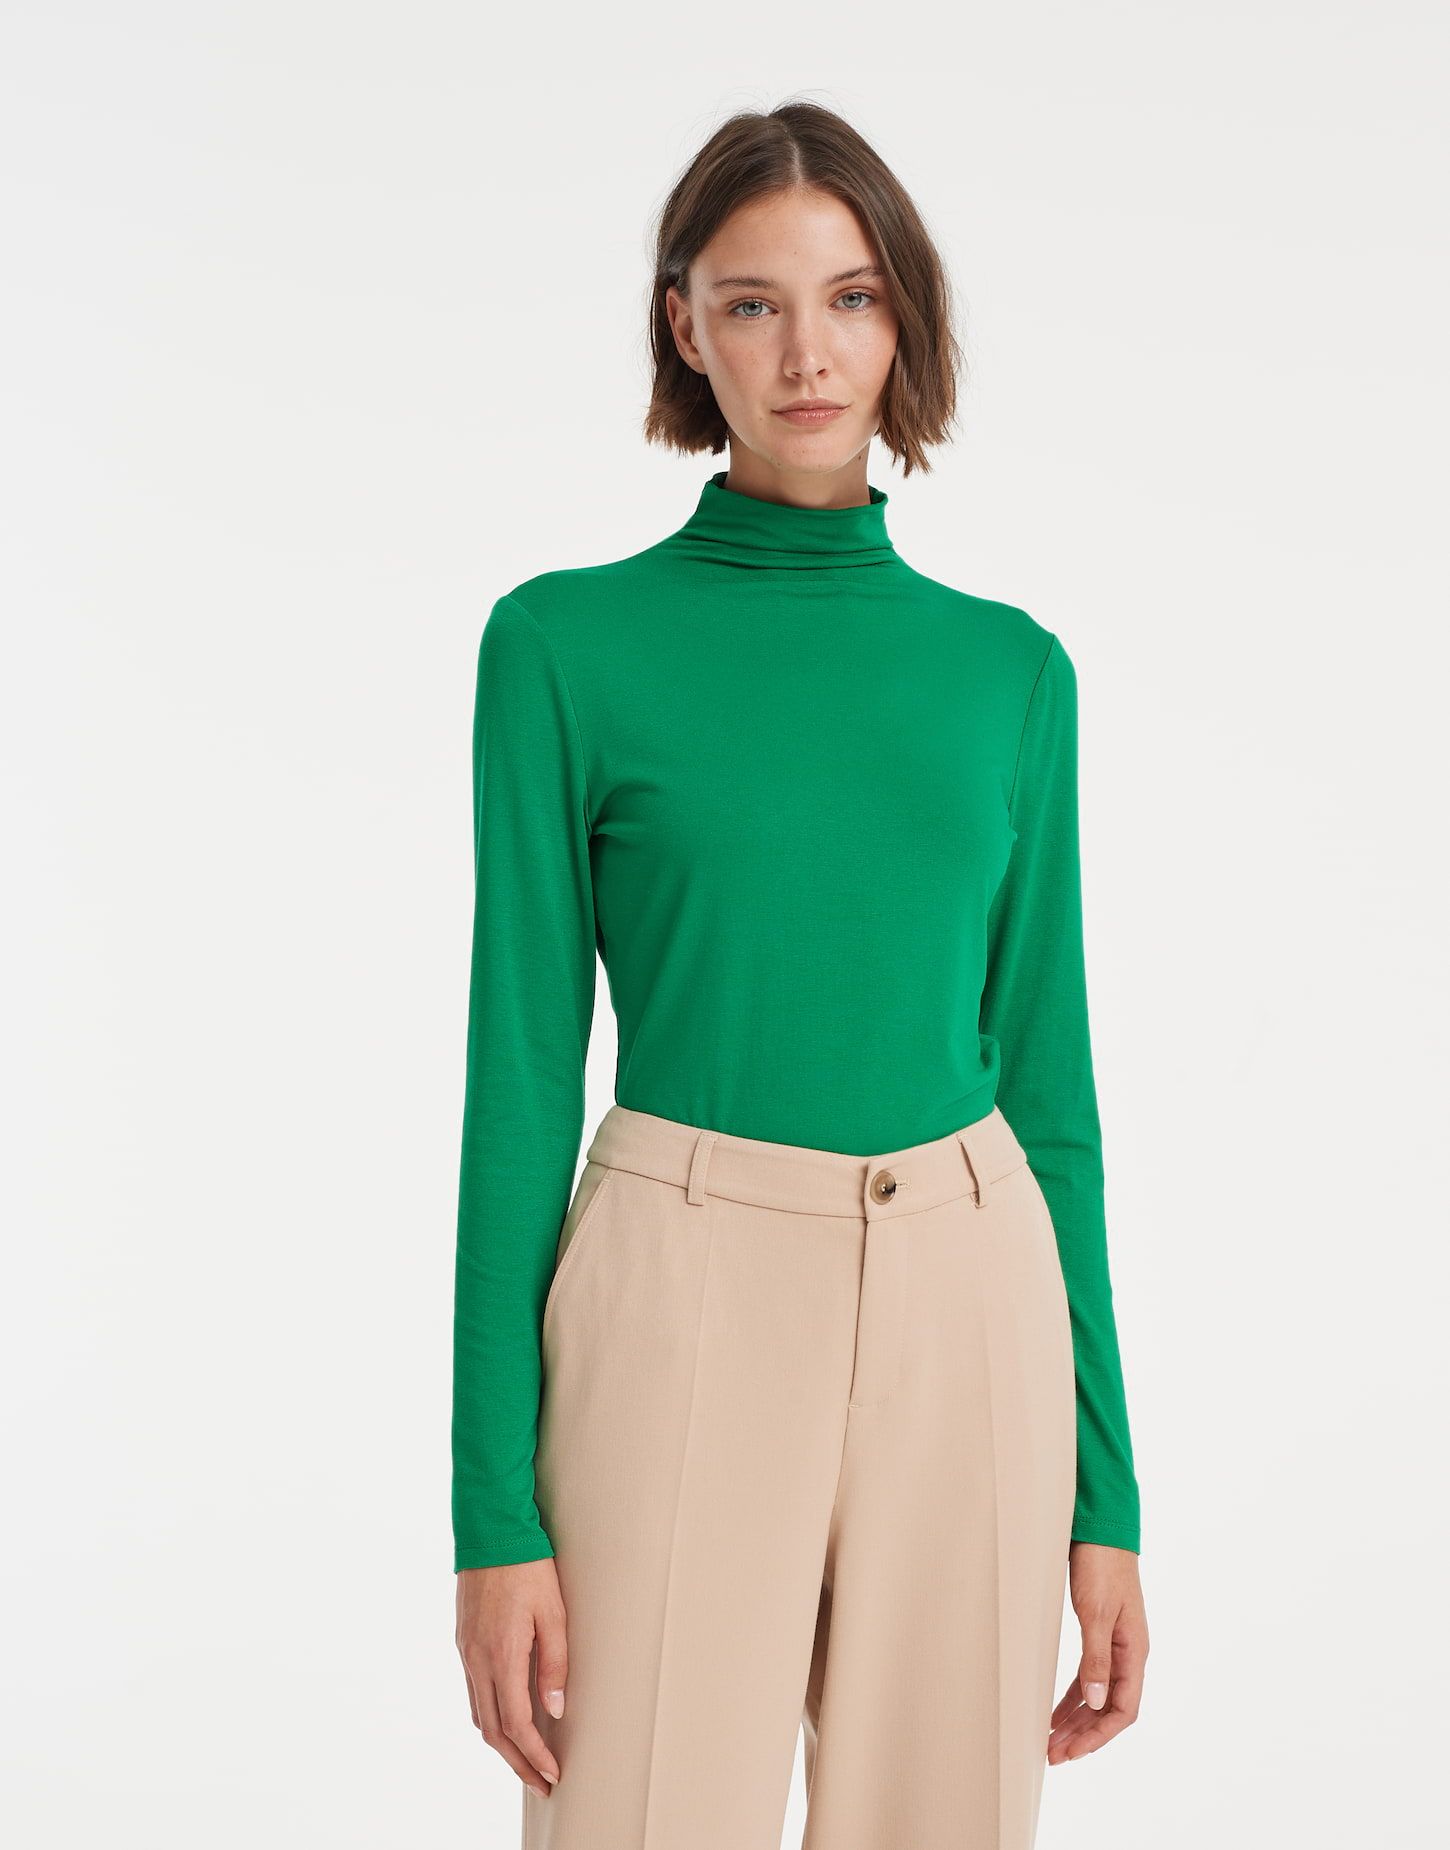 OPUS | sayar tulip green Henri\'s online bestellen Fashion T-shirt